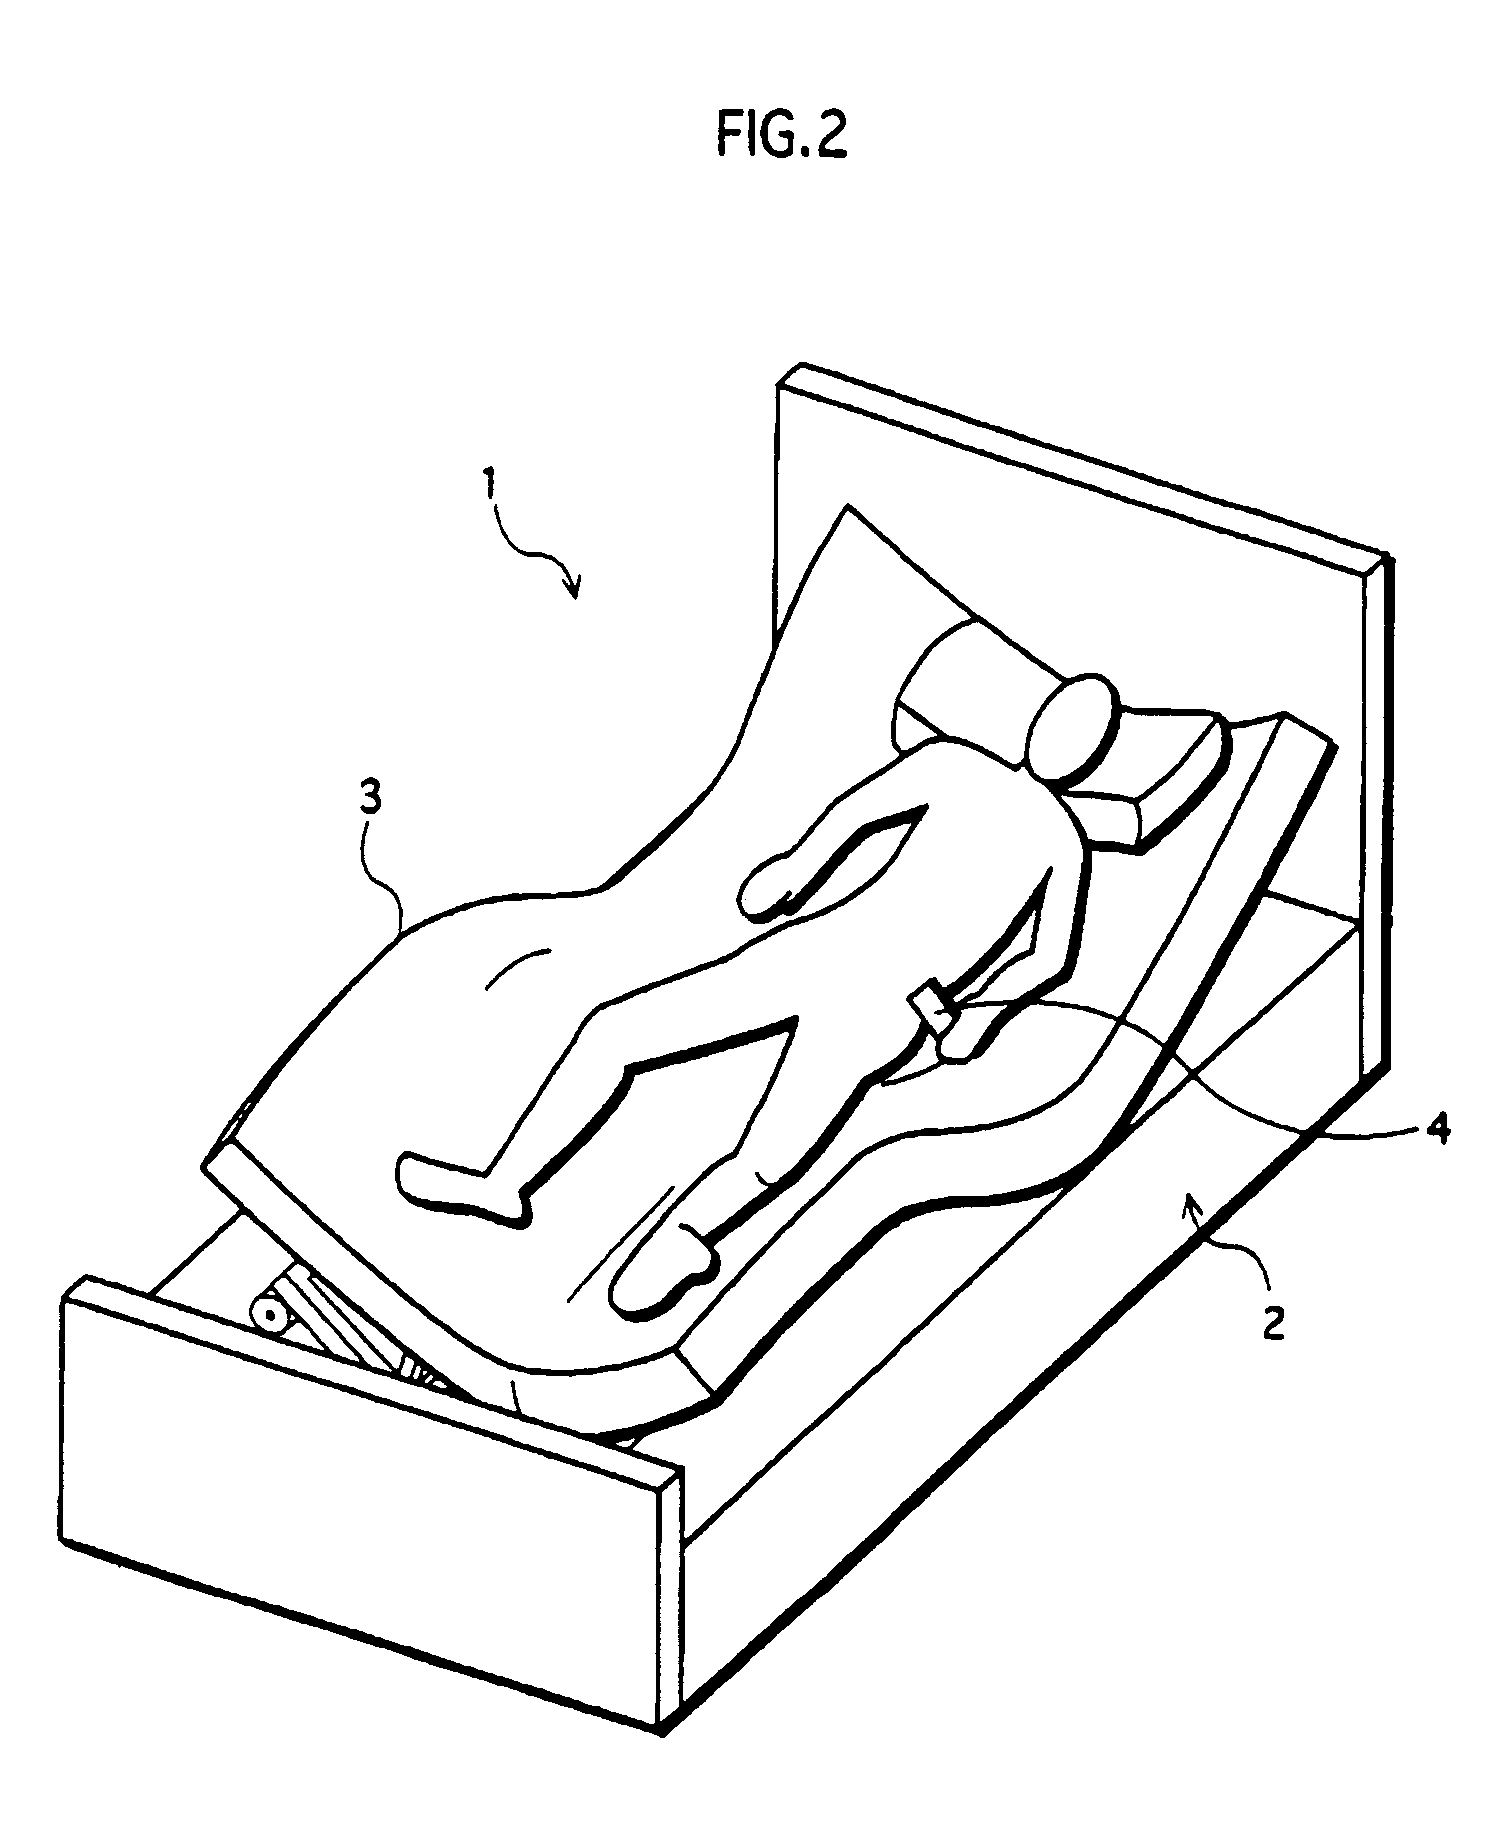 Adjustable bed